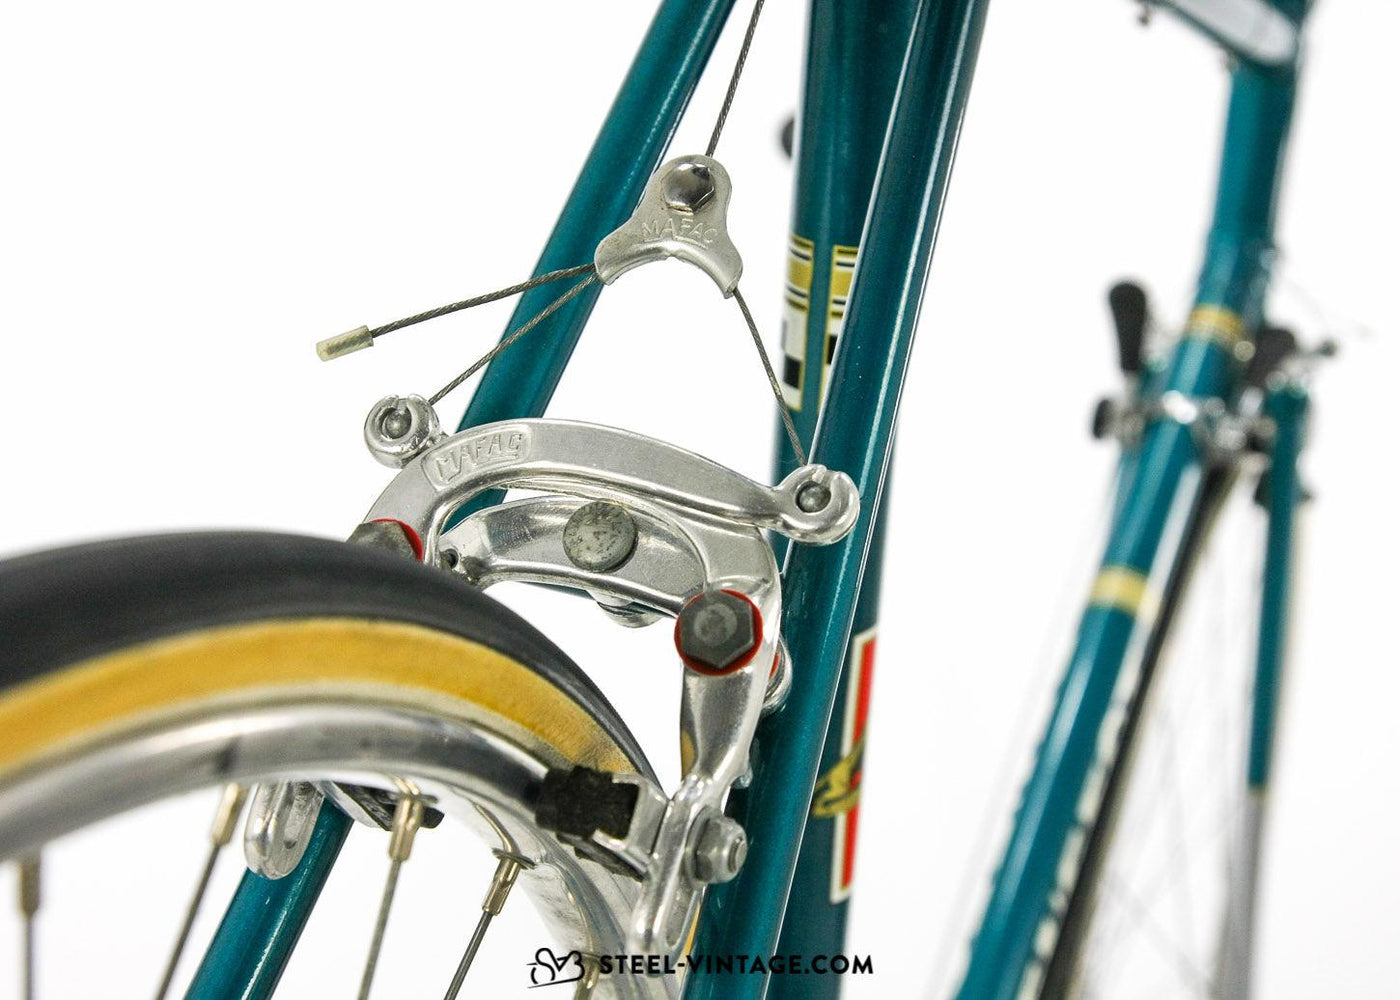 Peugeot PA10/LE Classic Road Bicycle 1977 - Steel Vintage Bikes